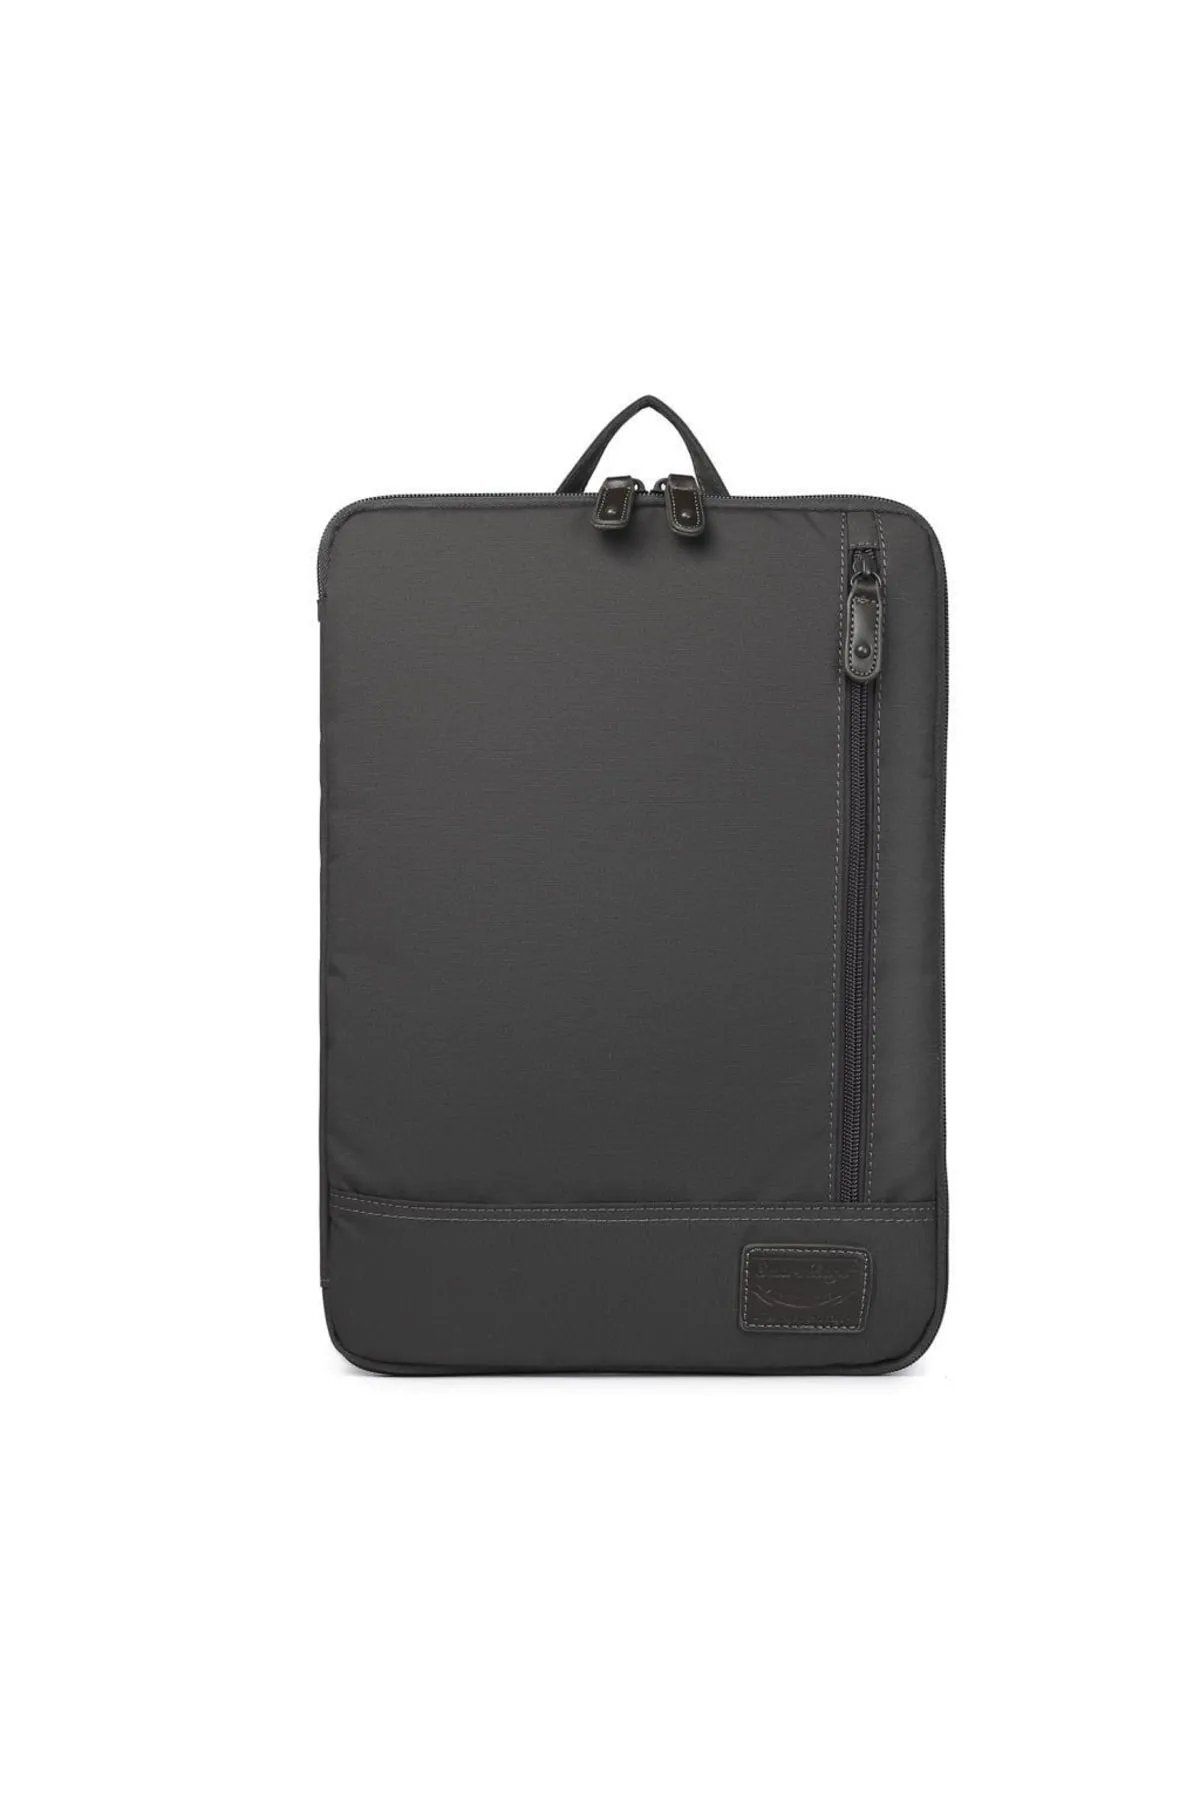 Smart Bags Unisex Macbook Air - Macbook Pro 15&15.6 İnç Uyumlu Laptop Kılıfı 3191